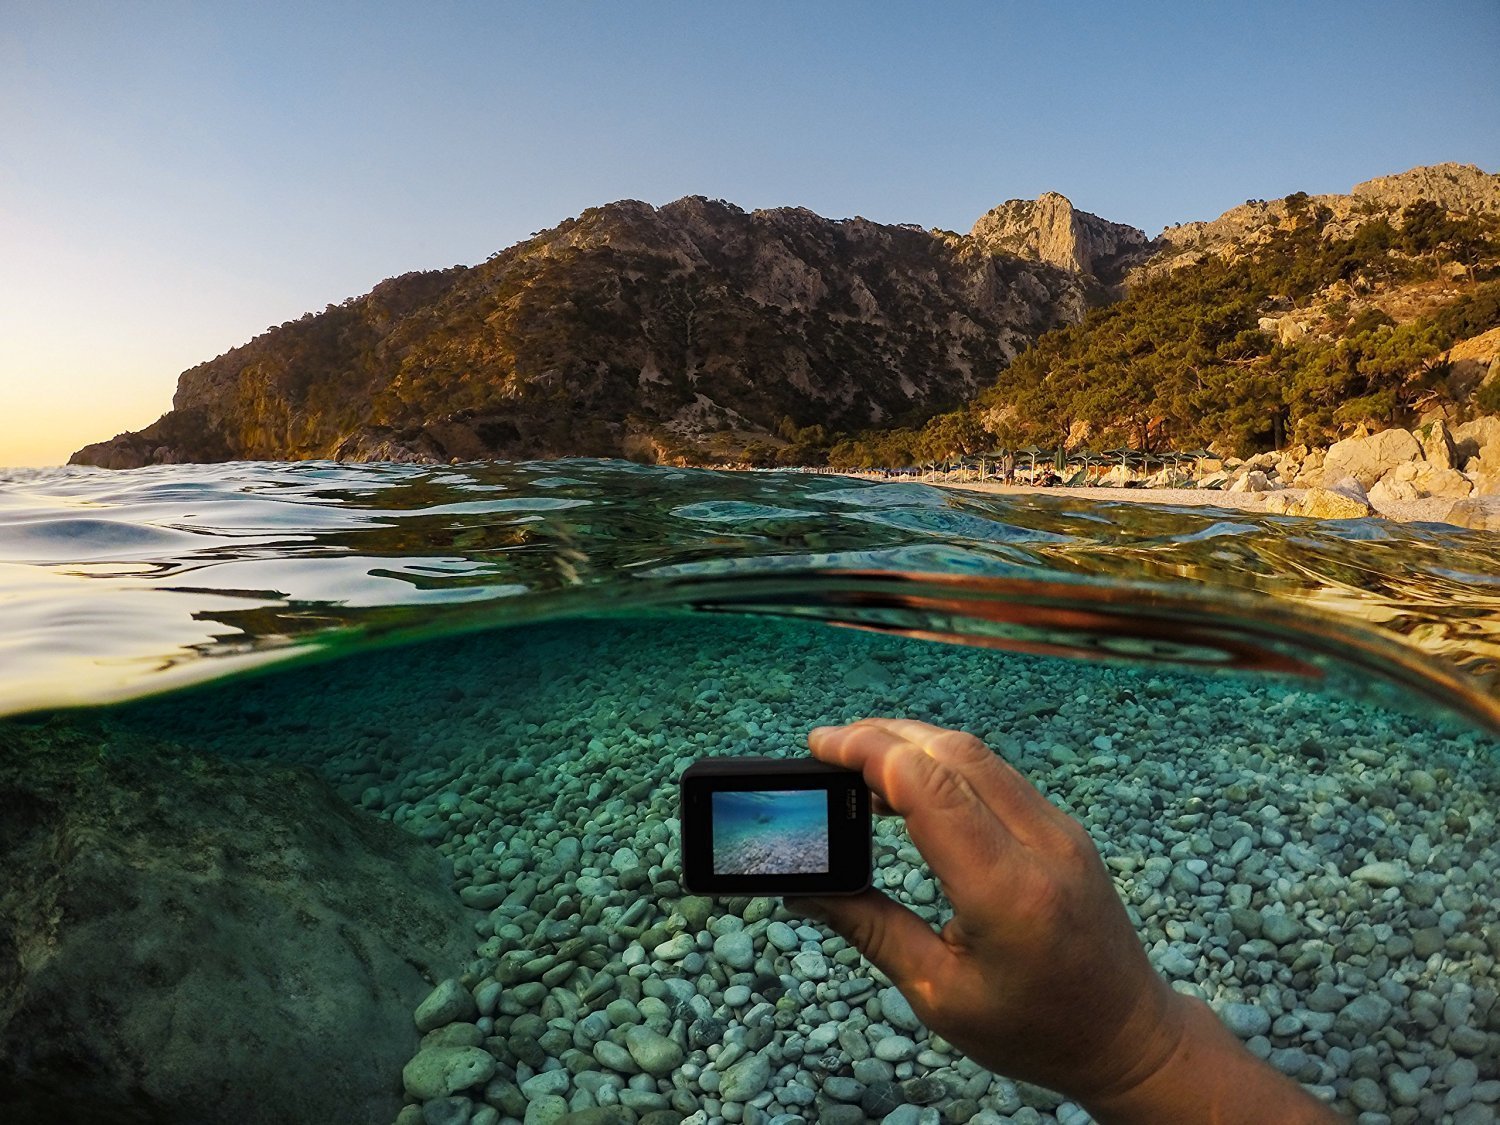 Standard avec carte SD de 64 Go-GoPro-Caméra d'action ultra HD, 30fps,  casque sous-marin, étanche, écran 2.0 - Cdiscount Appareil Photo